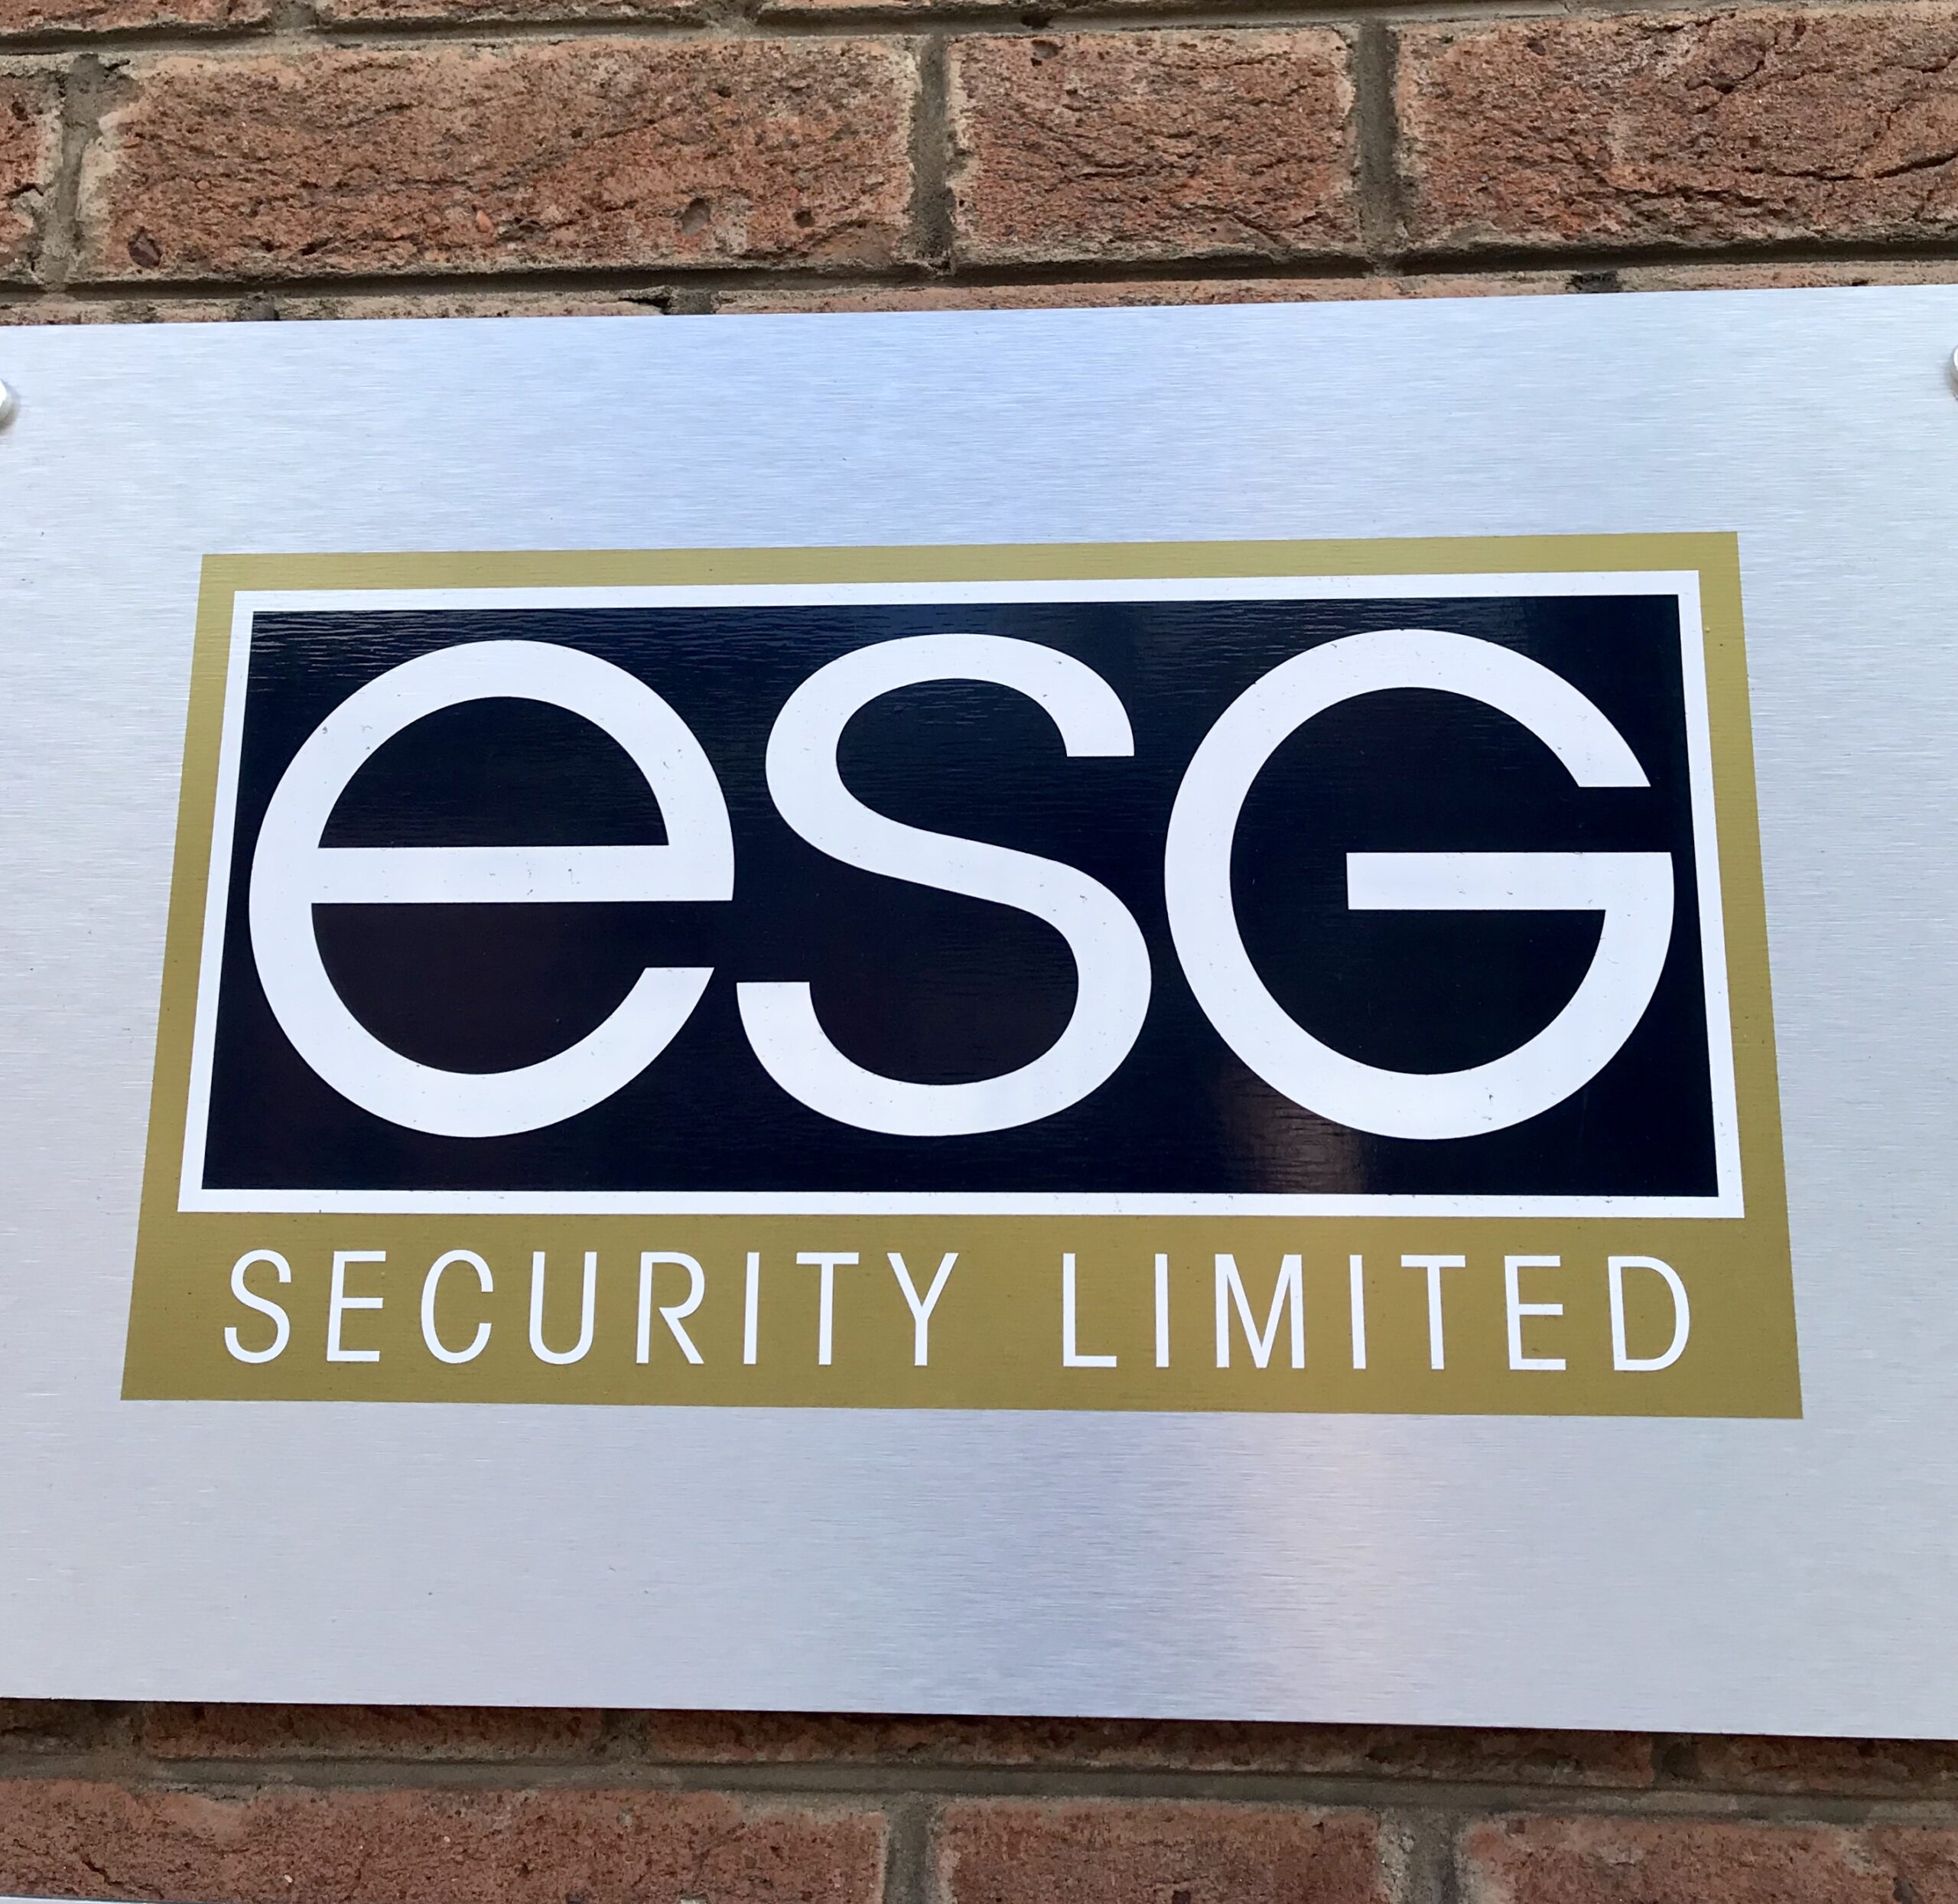 ESG Security